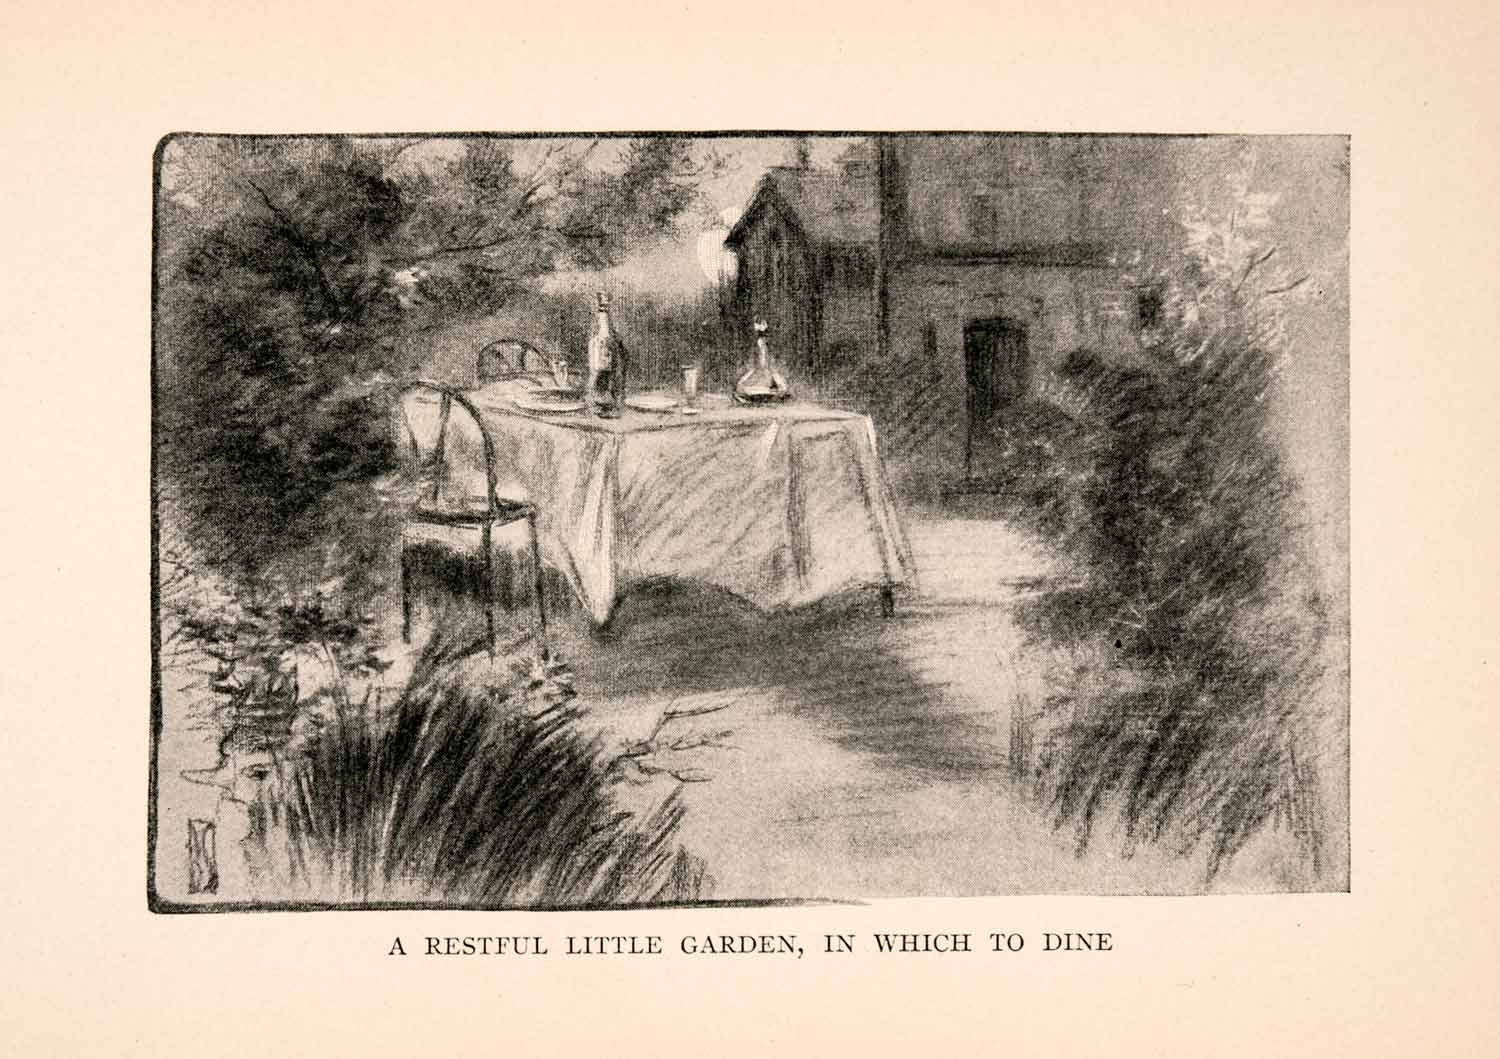 1905 Print Restful Little Garden Dine Table Wine Chairs Vegetation Flowers XGDA1